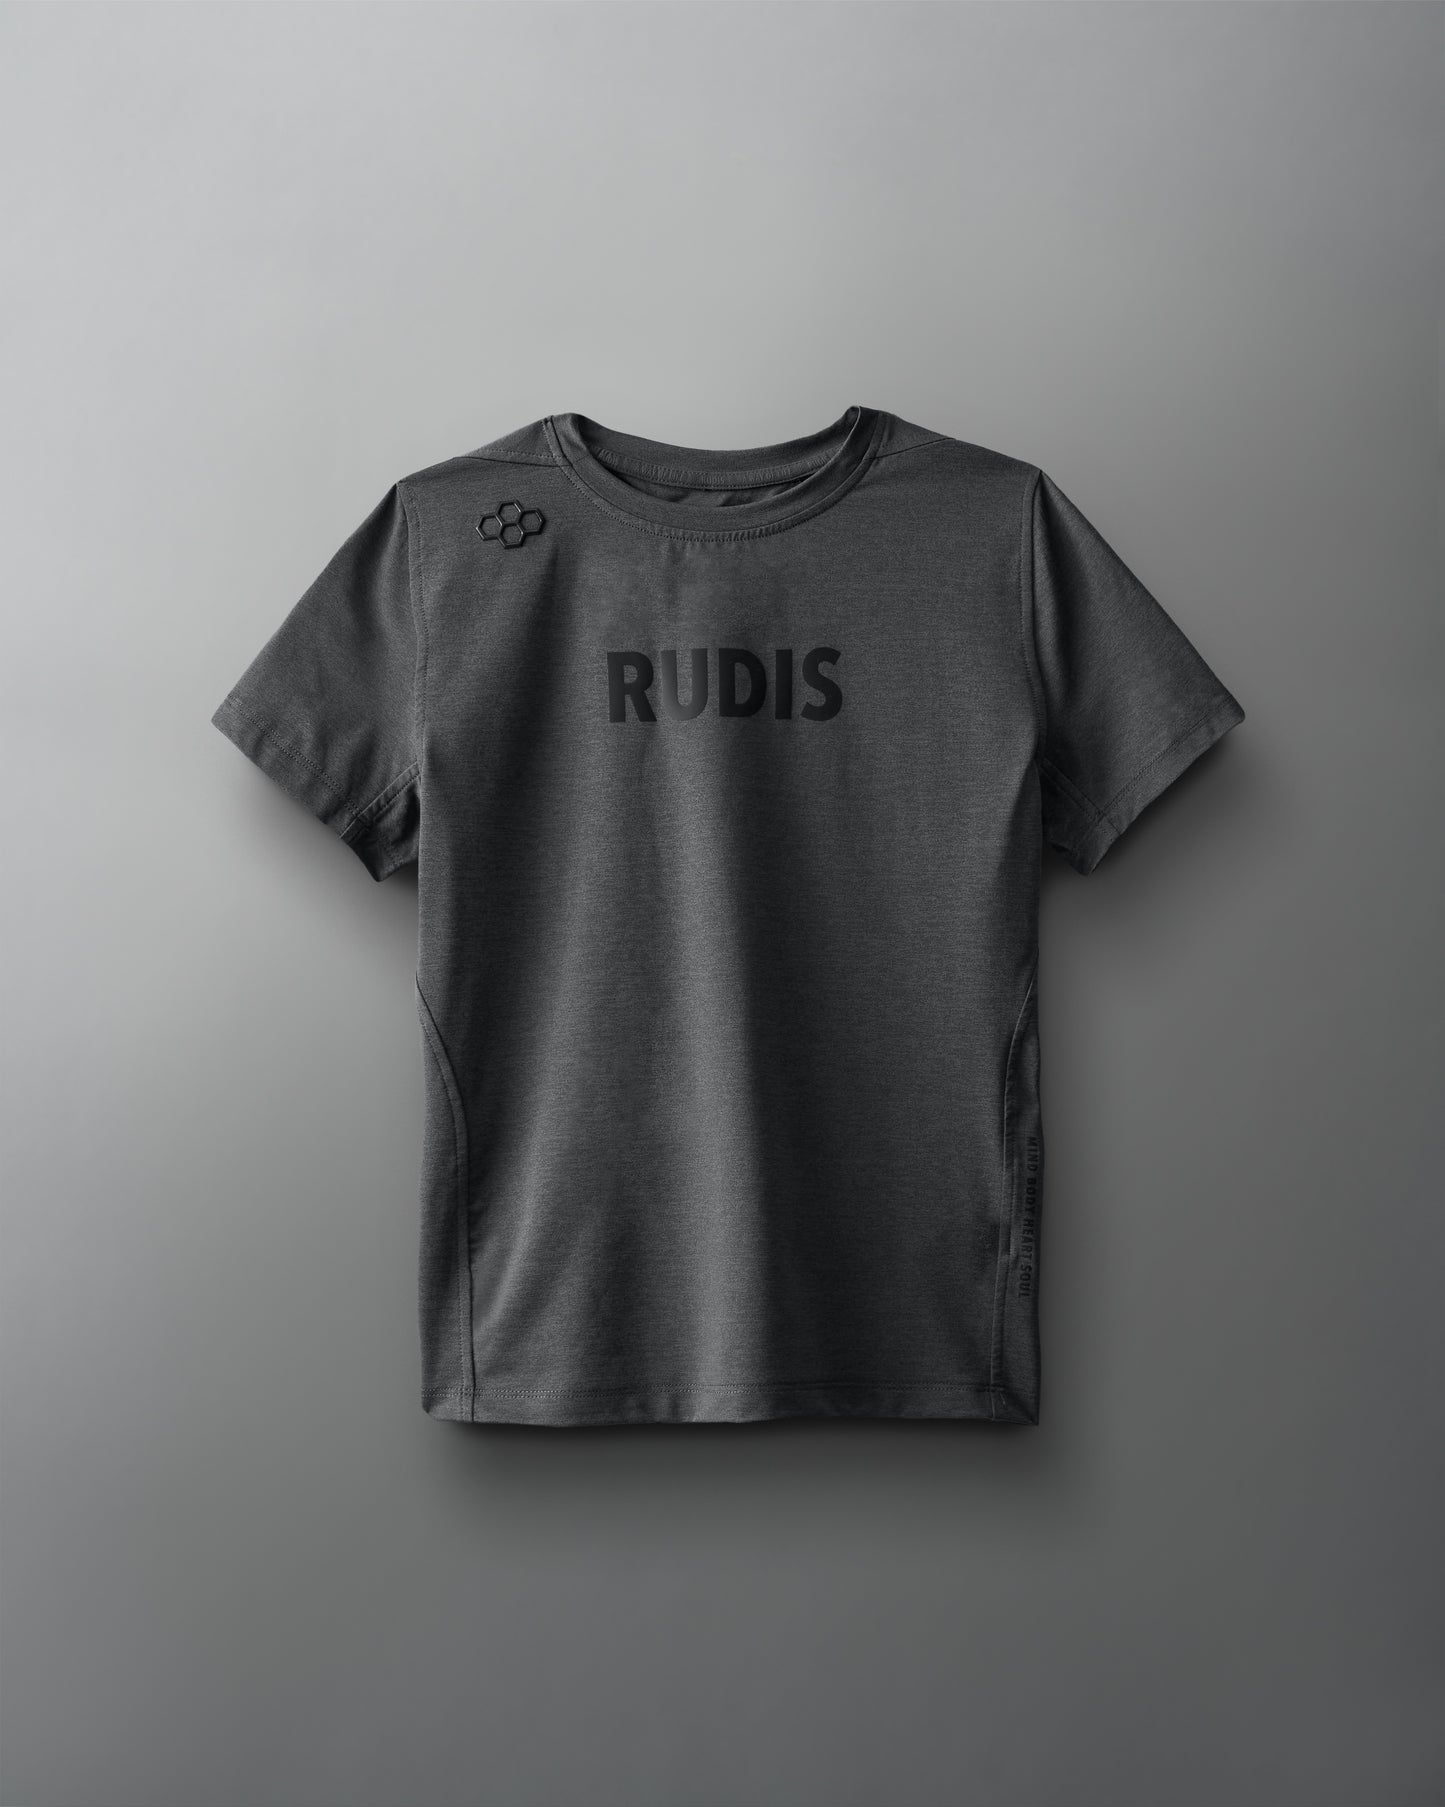 RUDIS Wordmark Performance Heather Youth T-Shirt